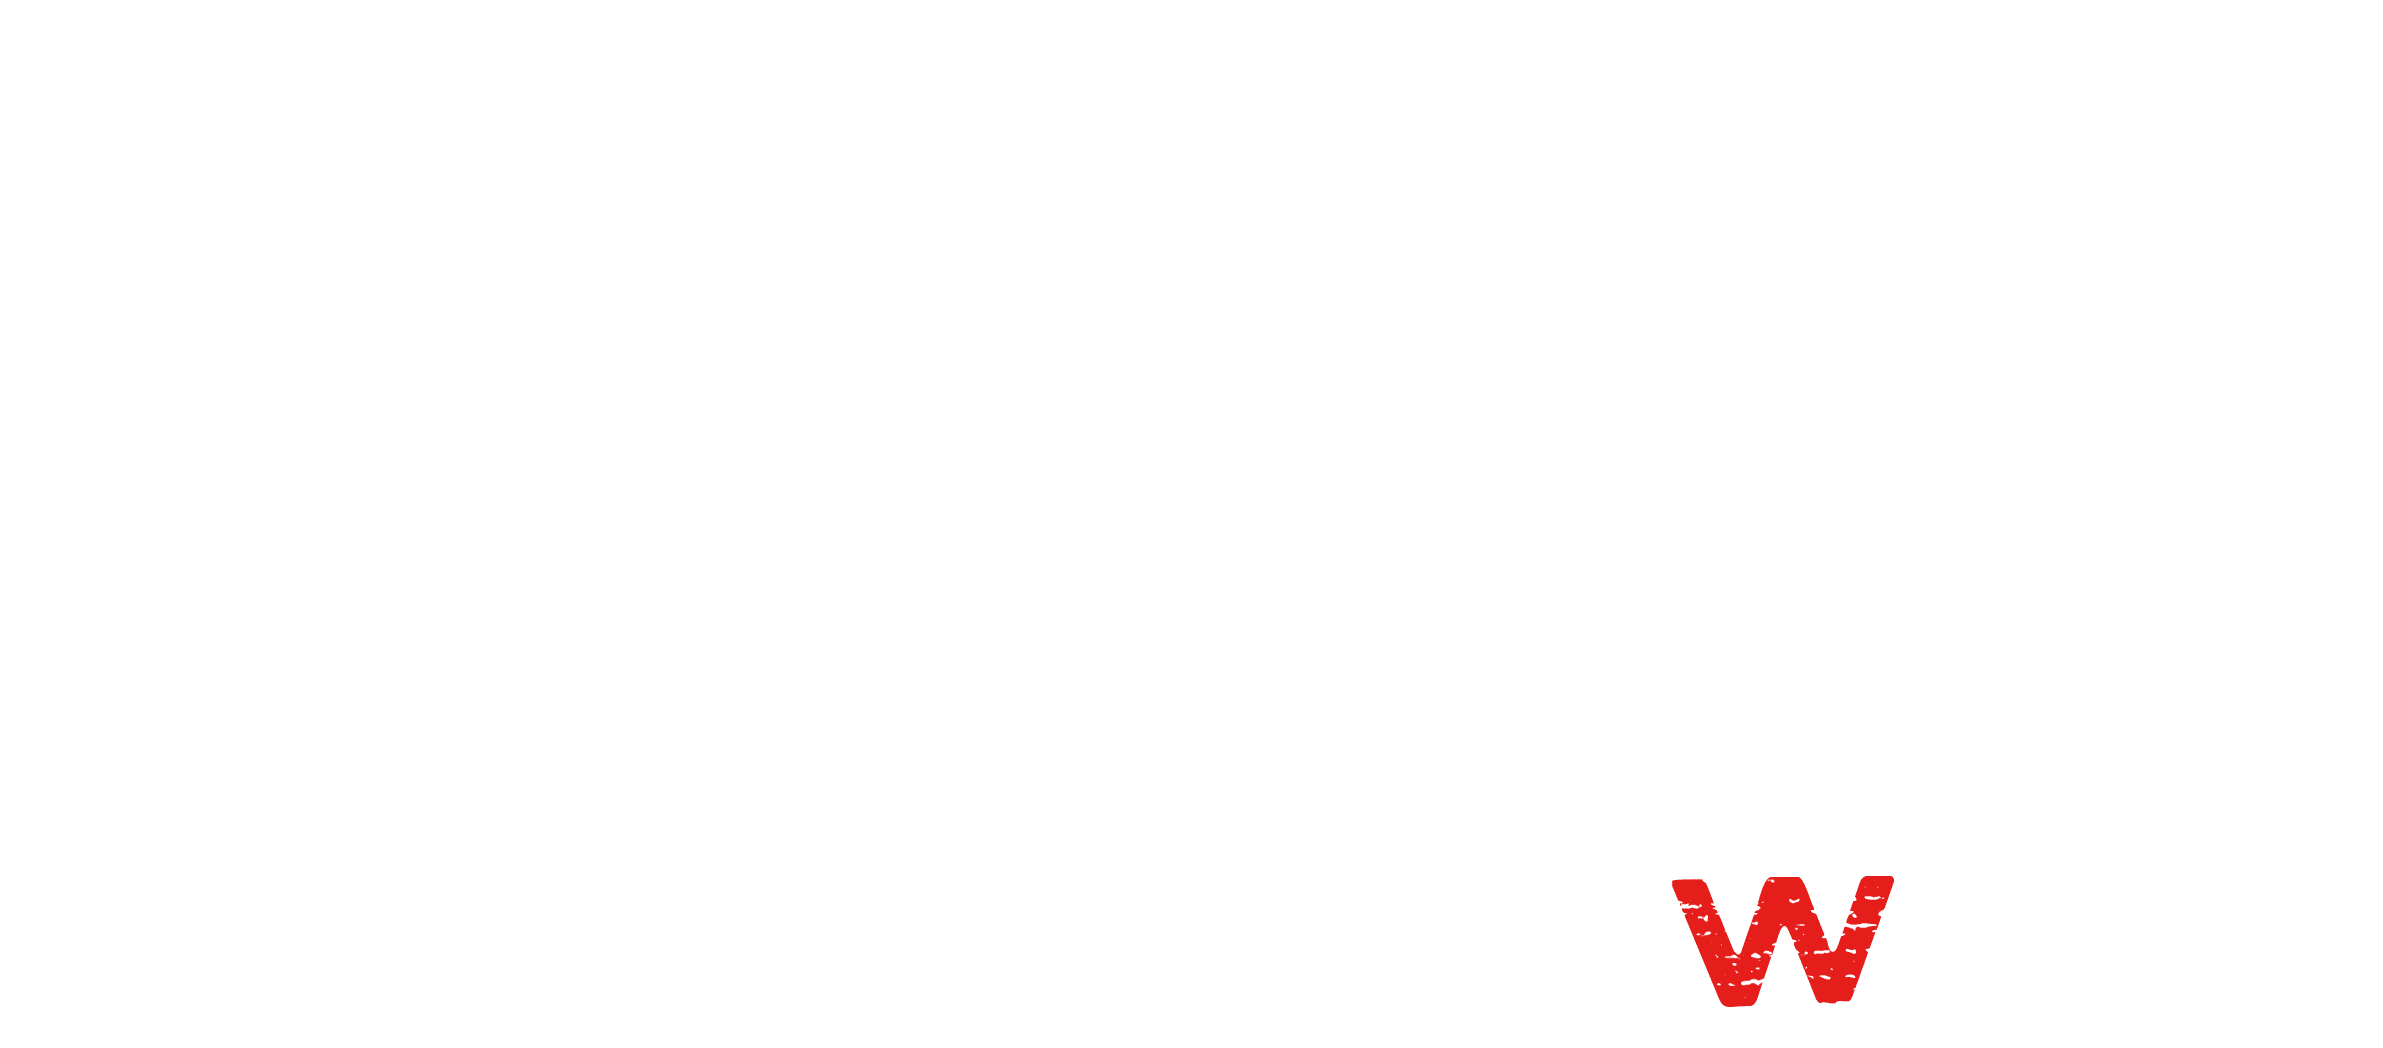 ùDead By Daylight Biohazard Project W. Logo